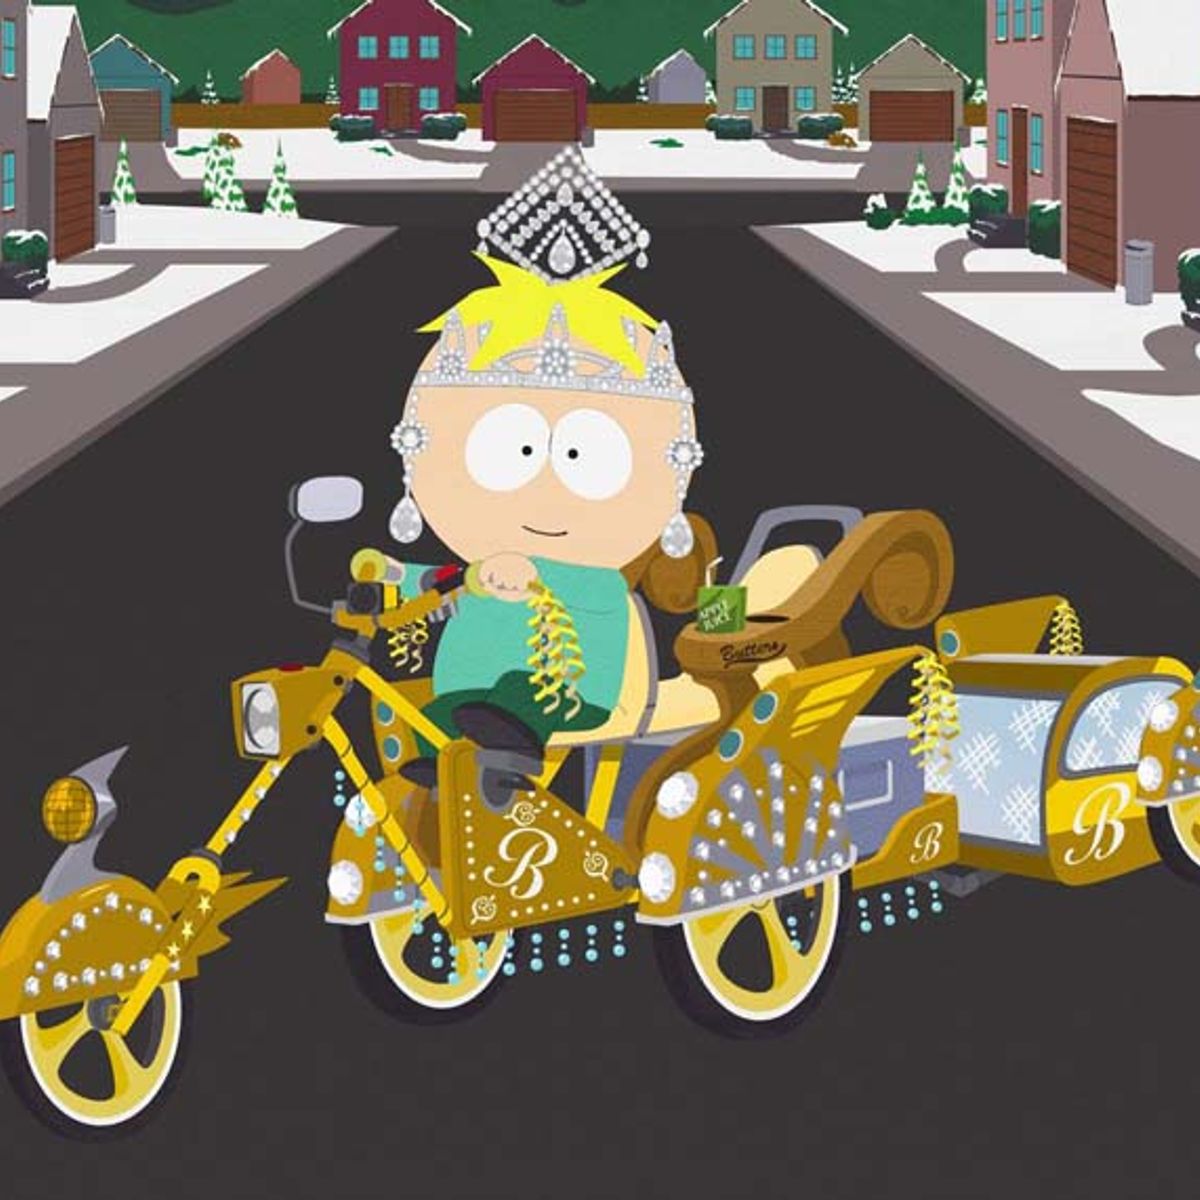 South Park Vs Amazon S Jeff Bezos Not Quite A Takedown In